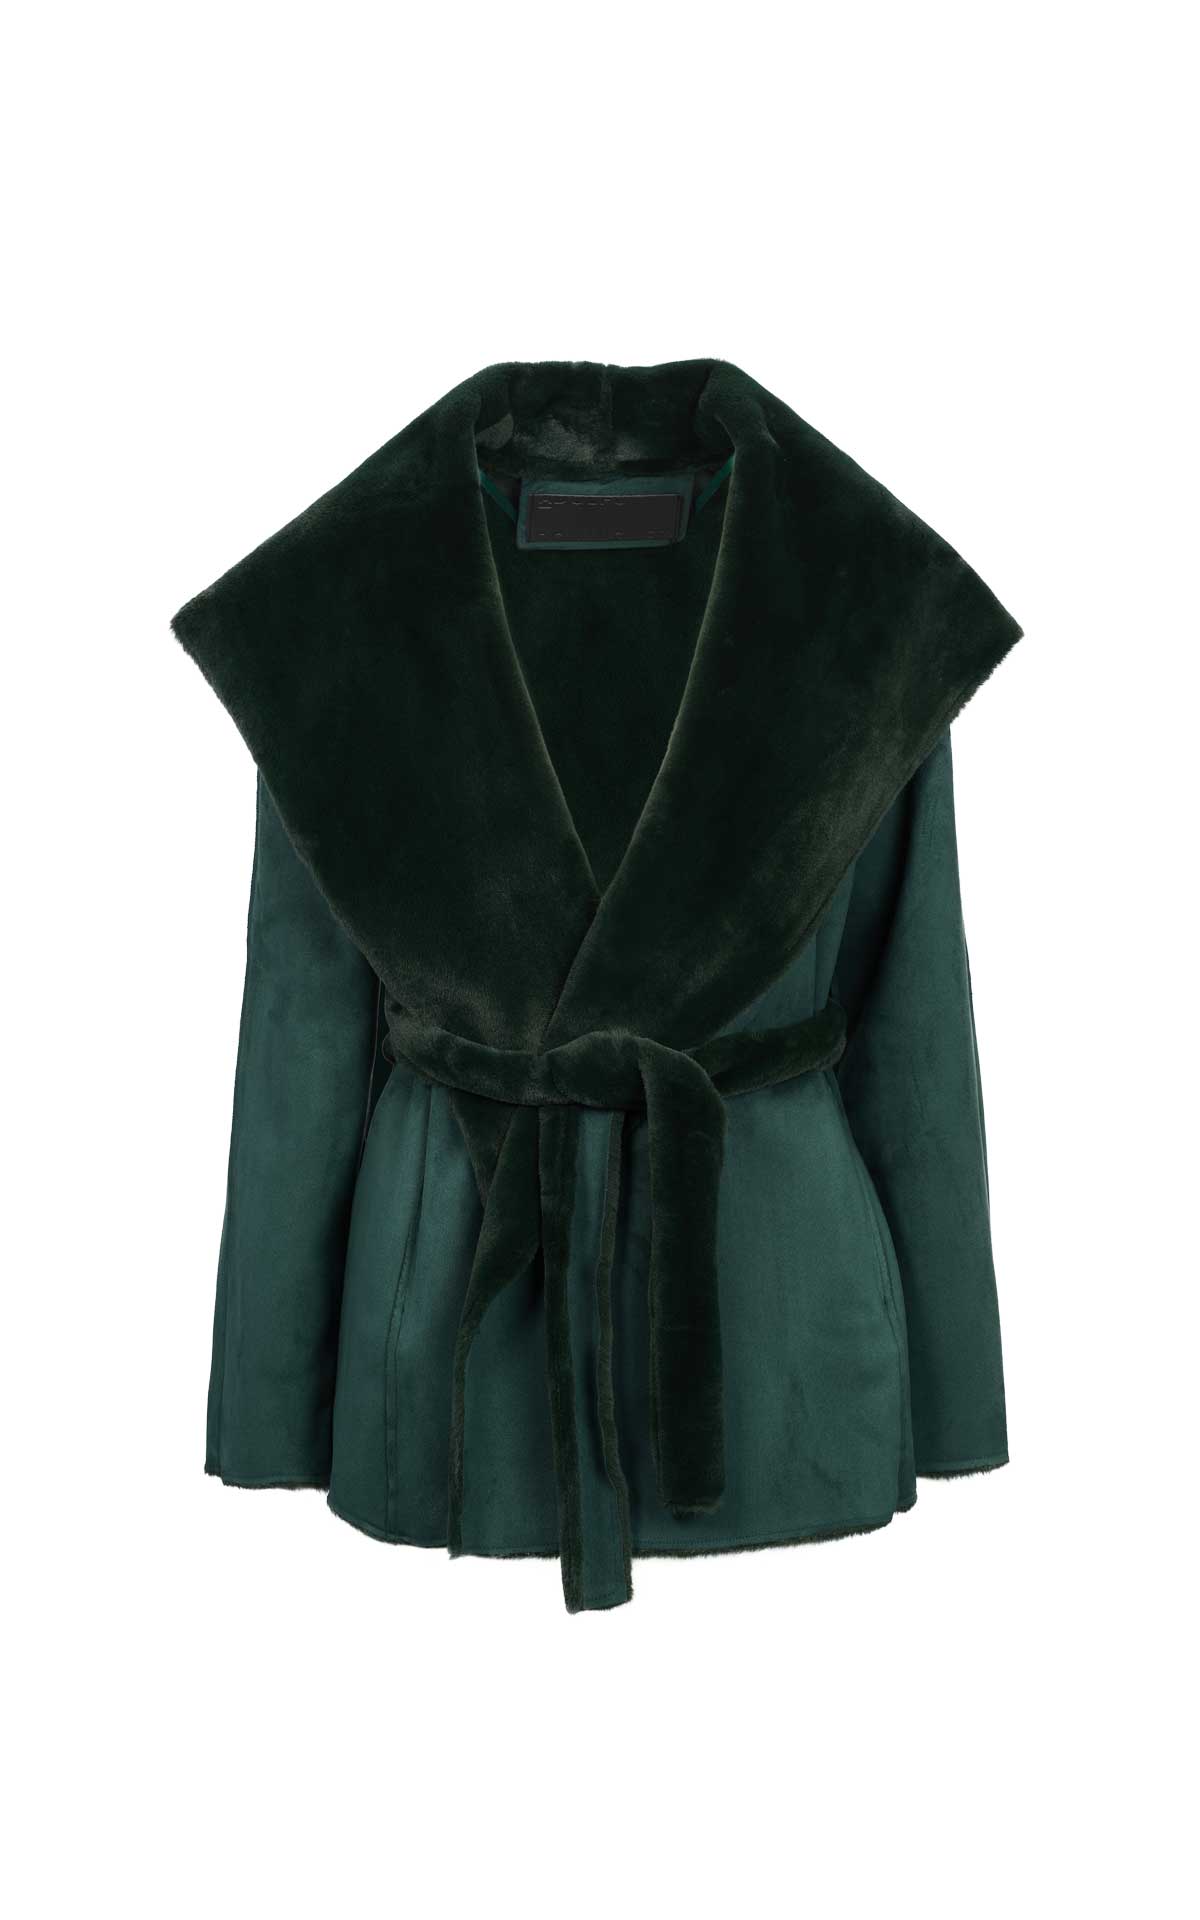 Green eco-leather jacket Adolfo dominguez